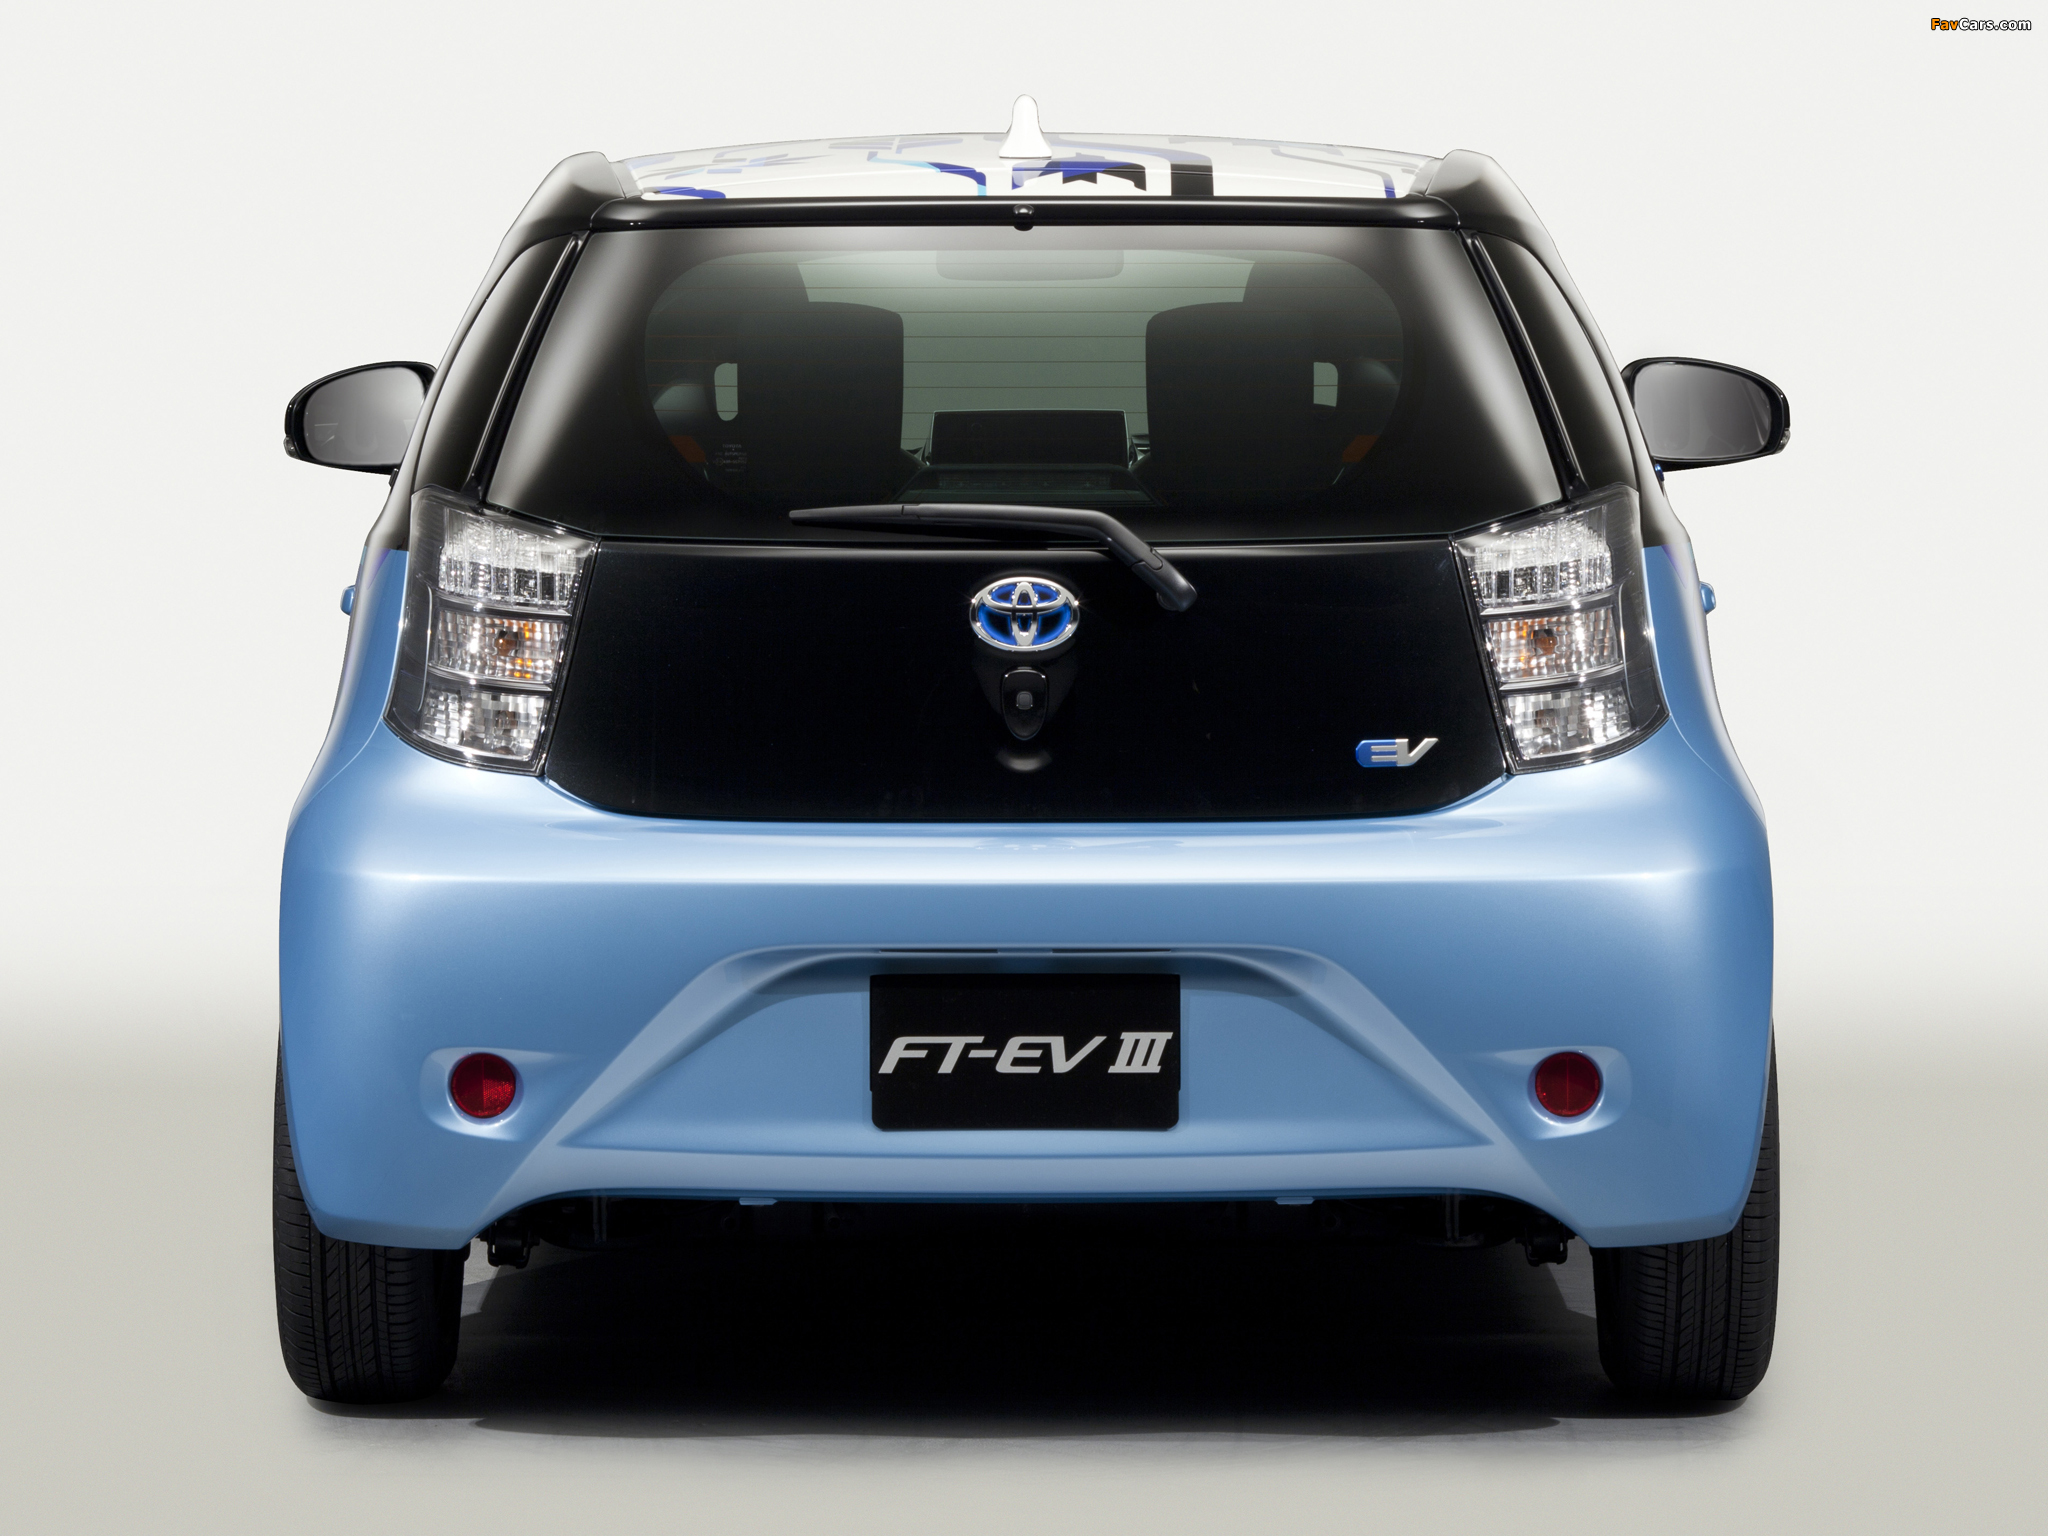 Toyota FT-EV III Concept 2011 photos (2048 x 1536)